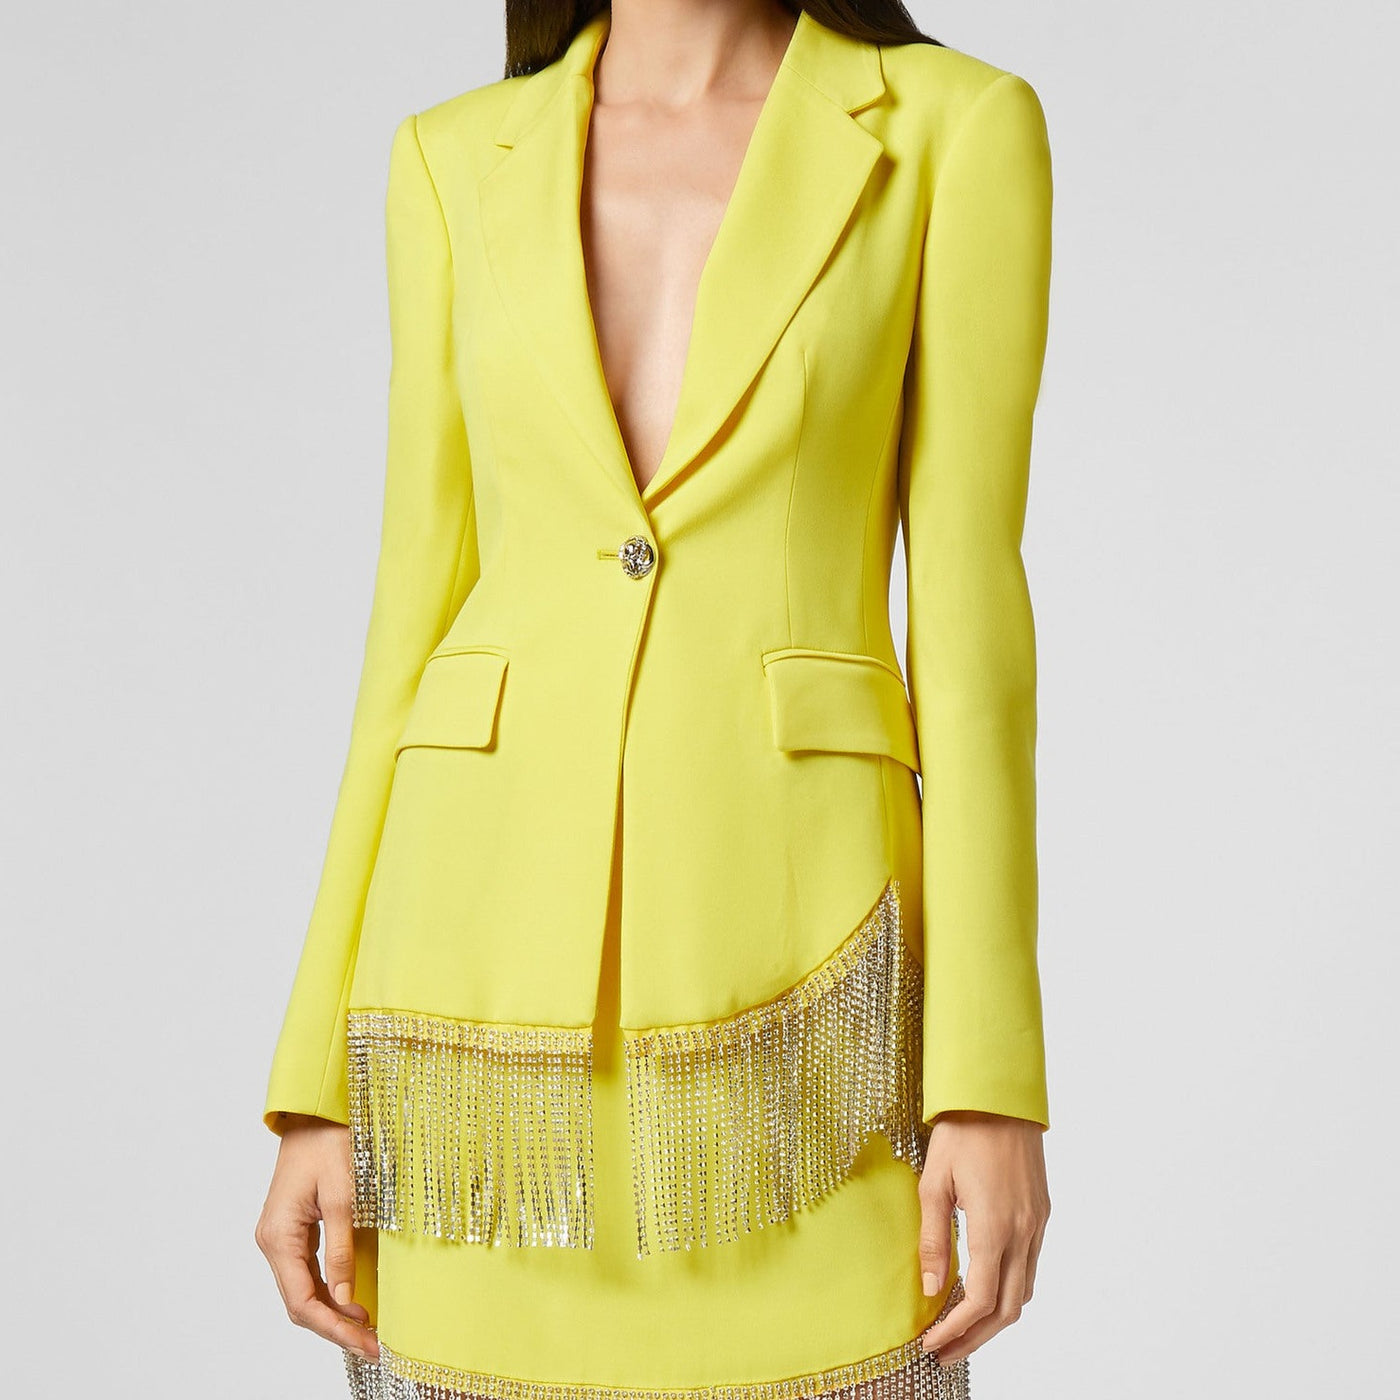 Sophia Full Color Crystal Fringe Blazer Suit - Hot fashionista